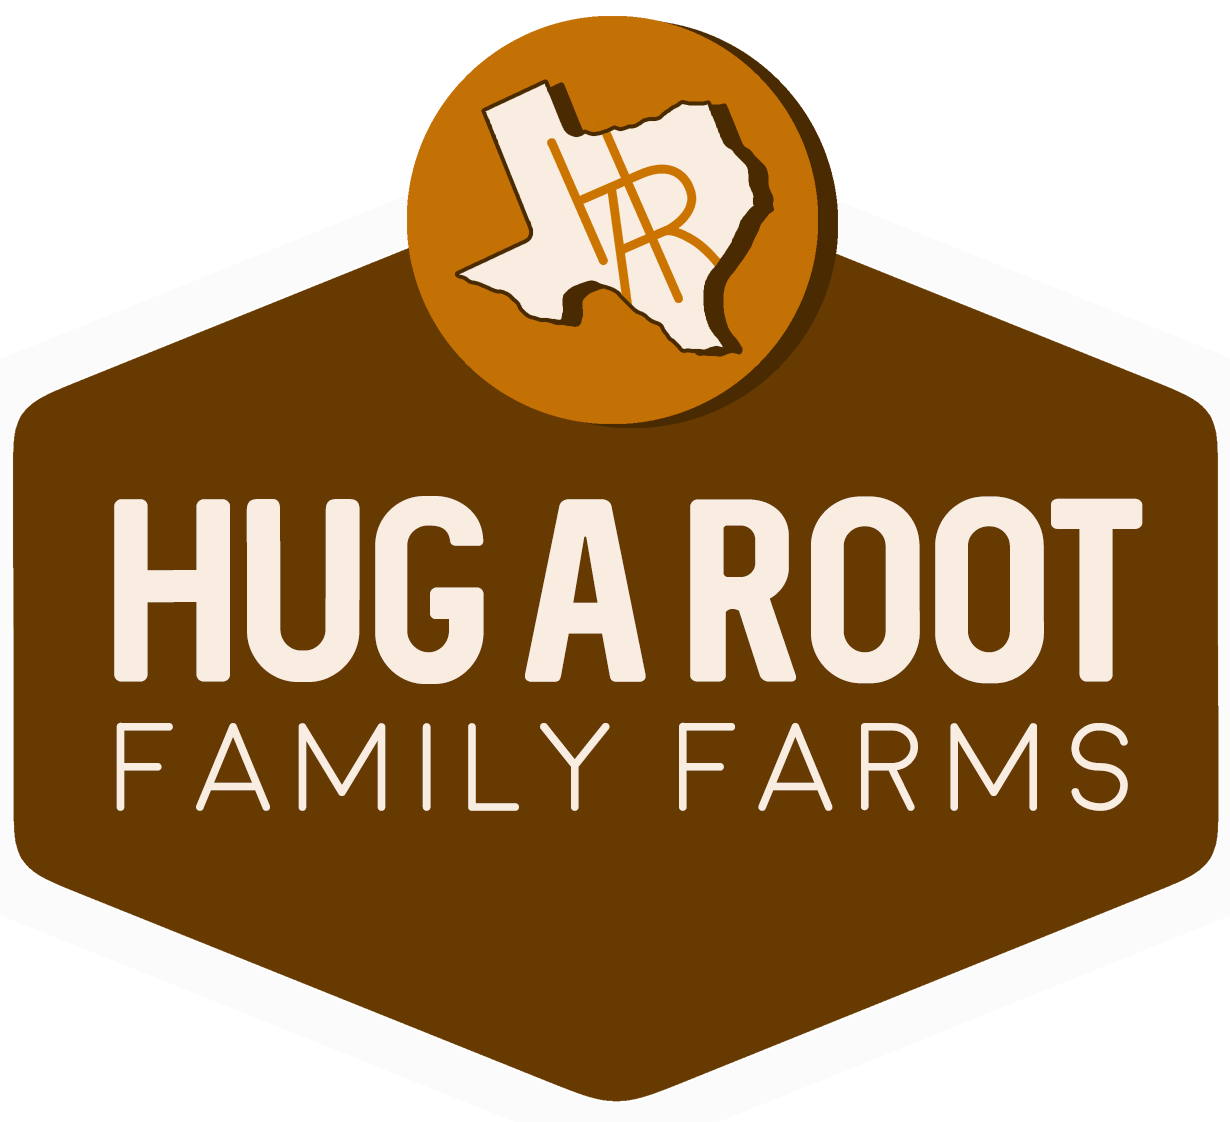 Hug-A-Root Family Farms